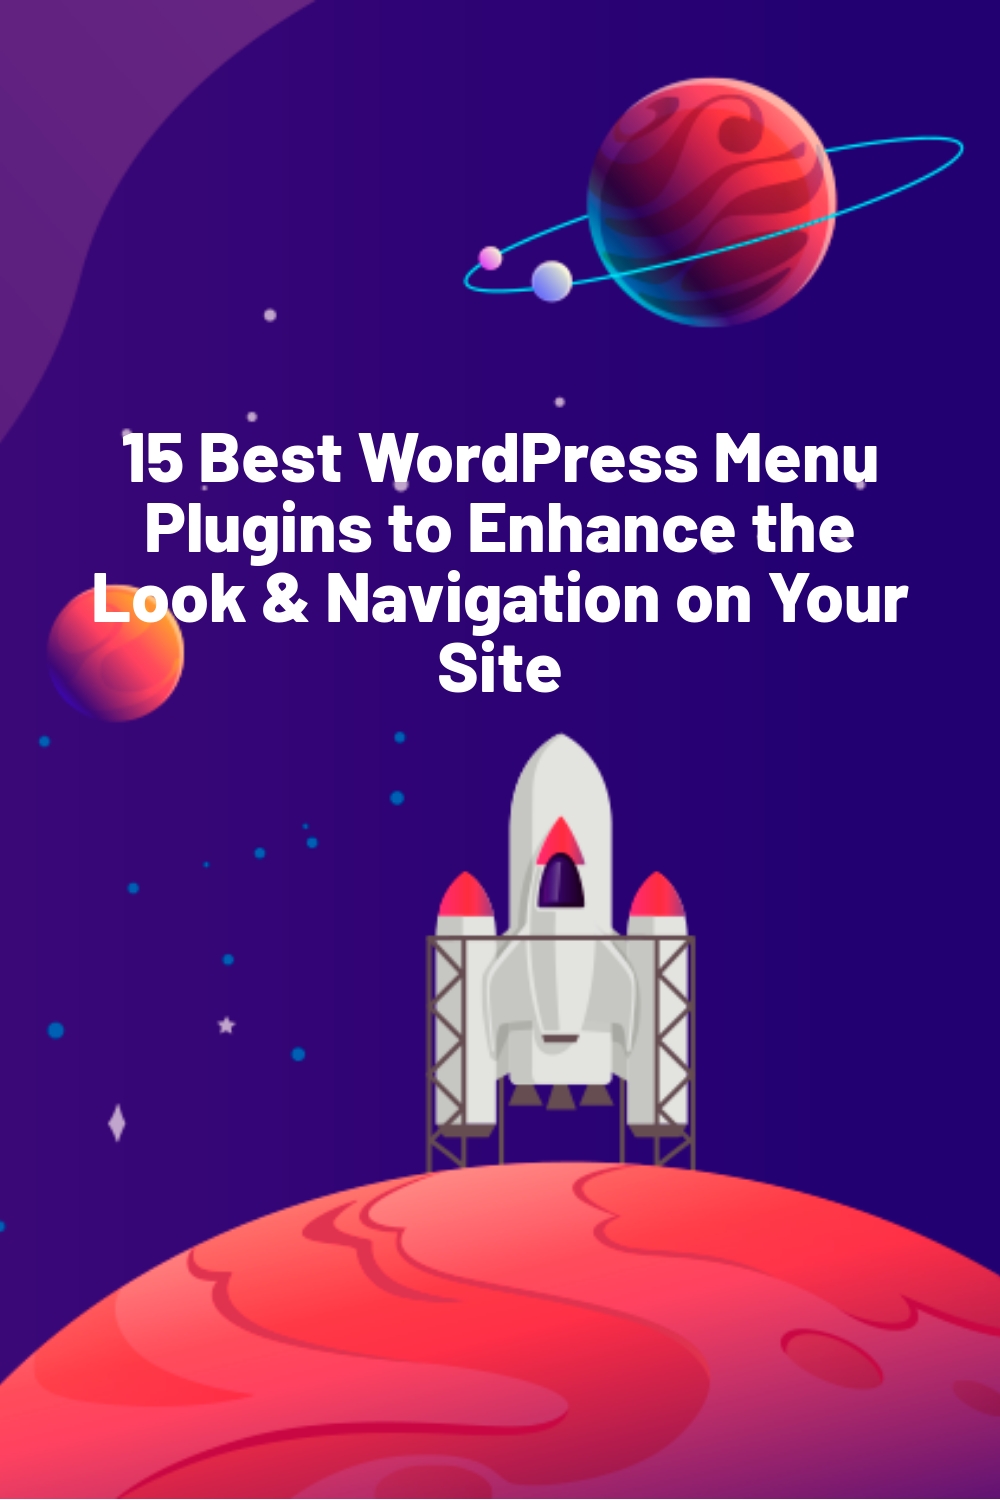 15 Best WordPress Menu Plugins to Enhance the Look & Navigation on Your Site